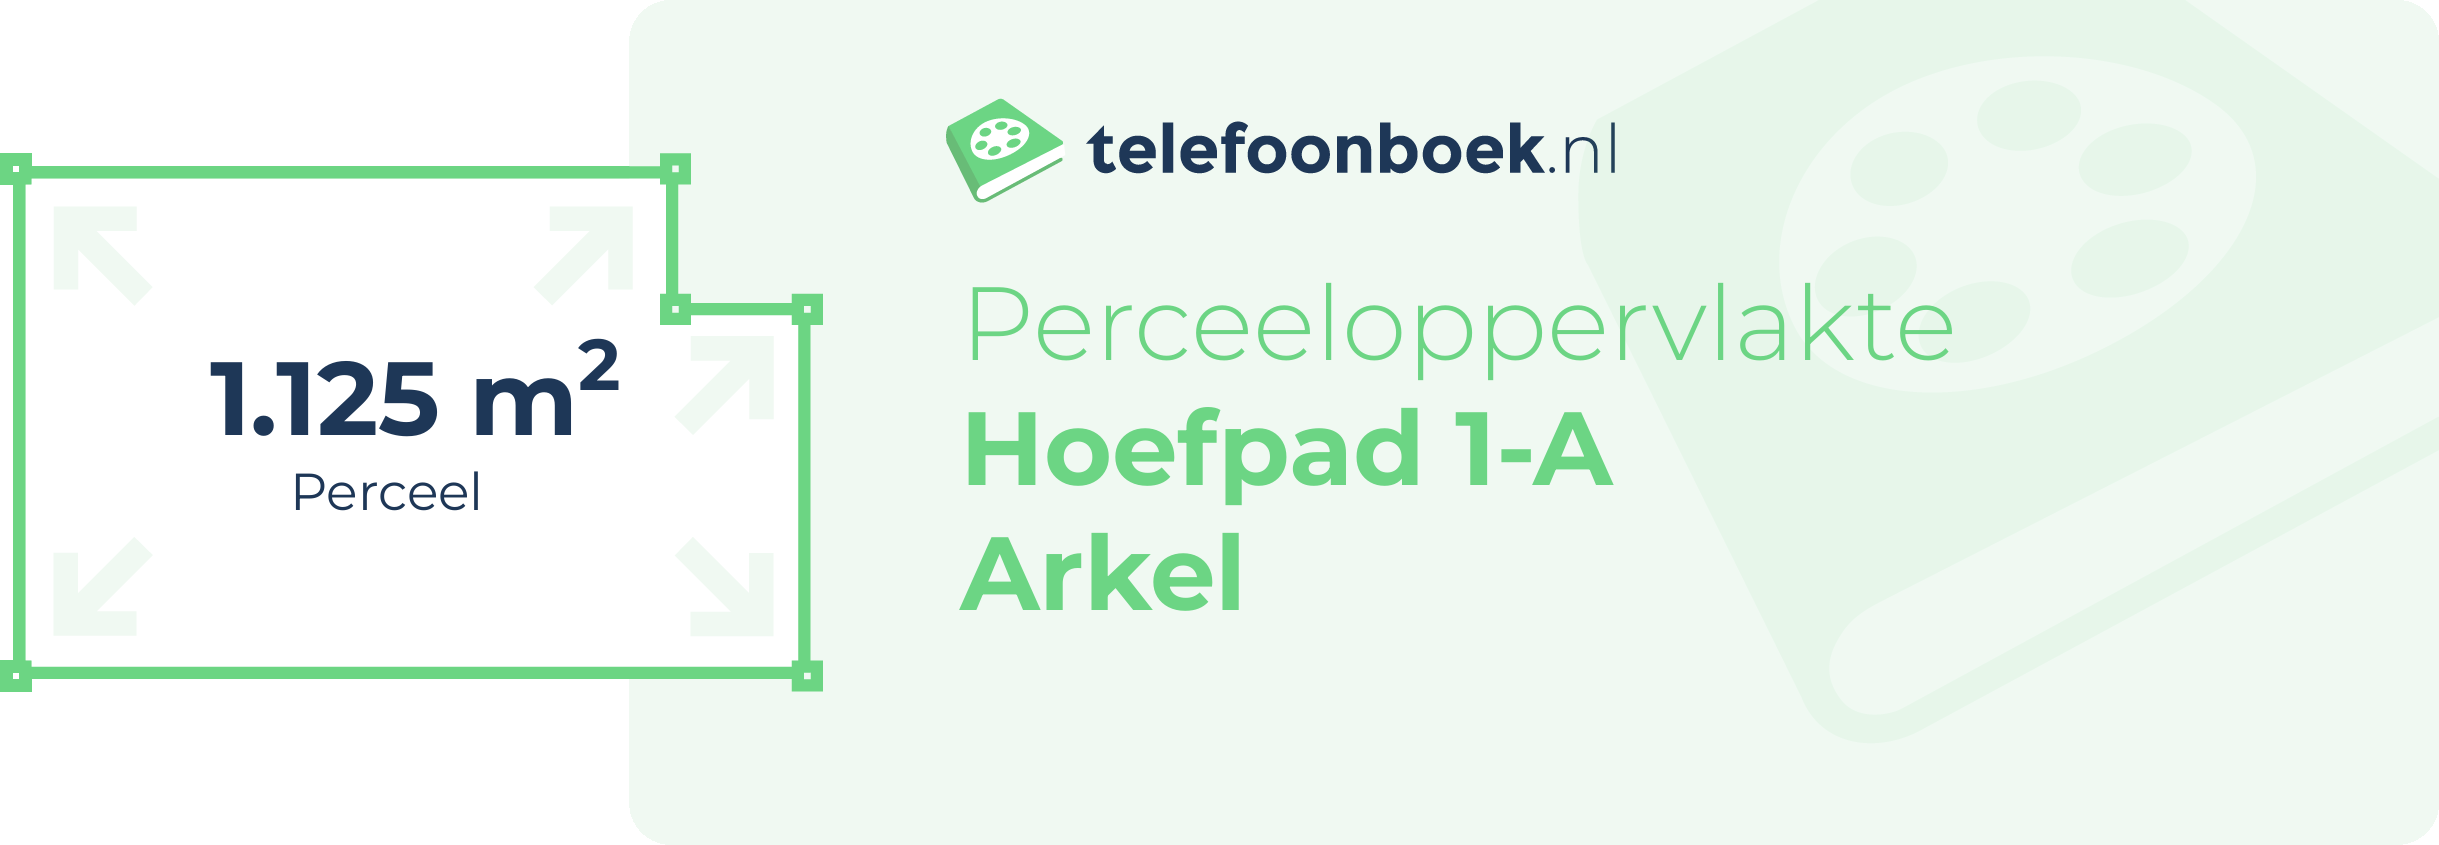 Perceeloppervlakte Hoefpad 1-A Arkel